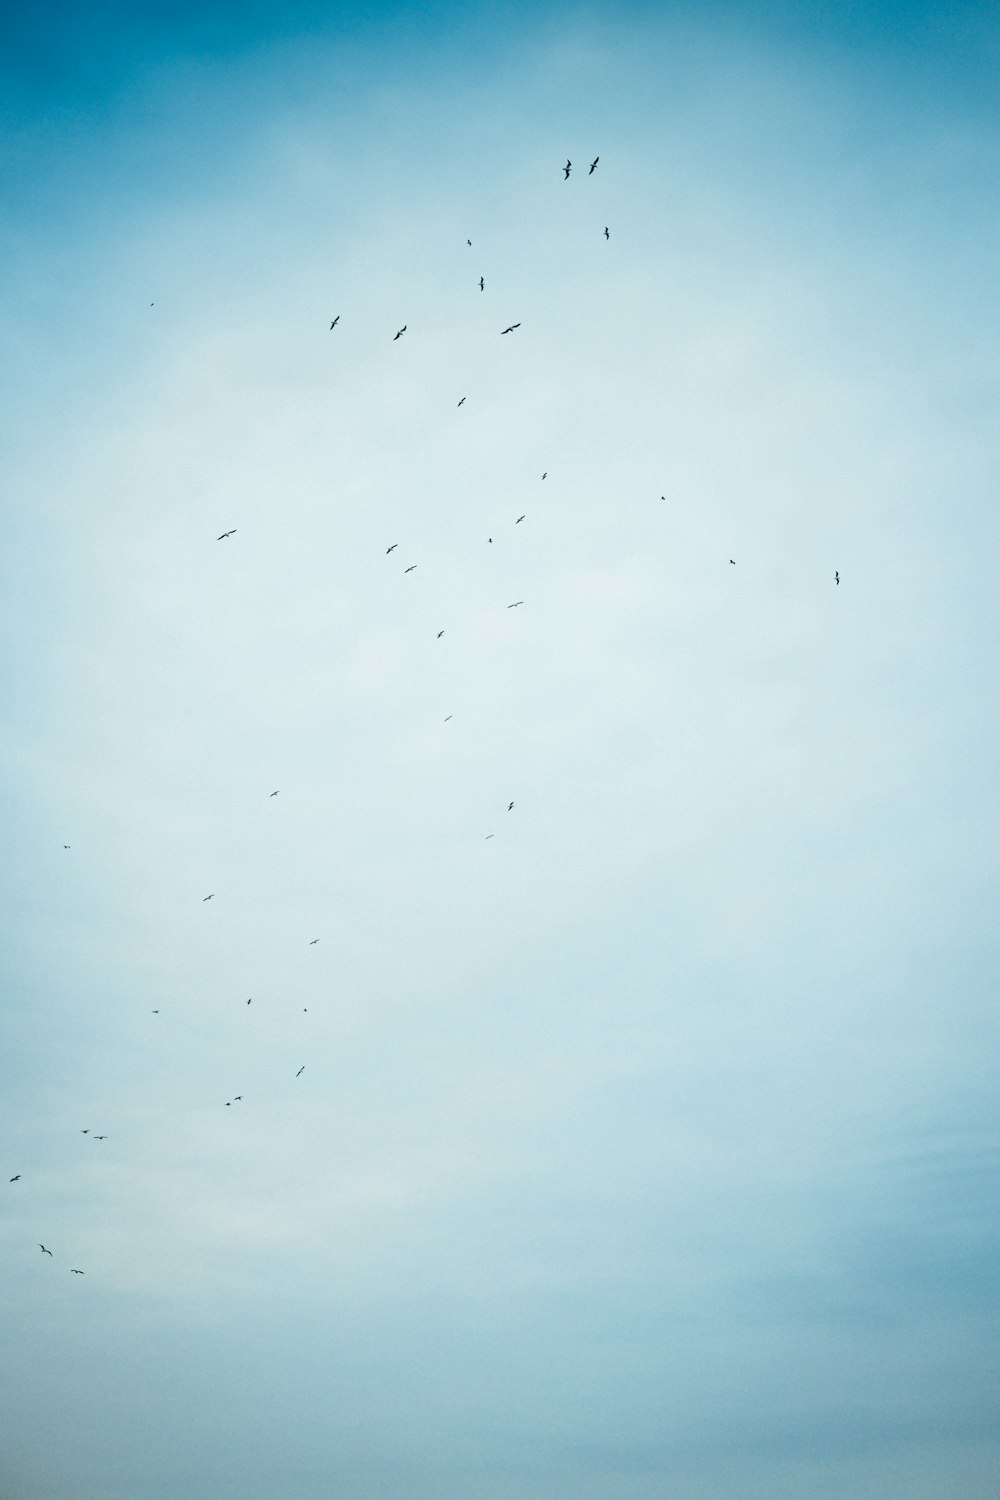 bando de pássaros voando sob nuvens brancas durante o dia